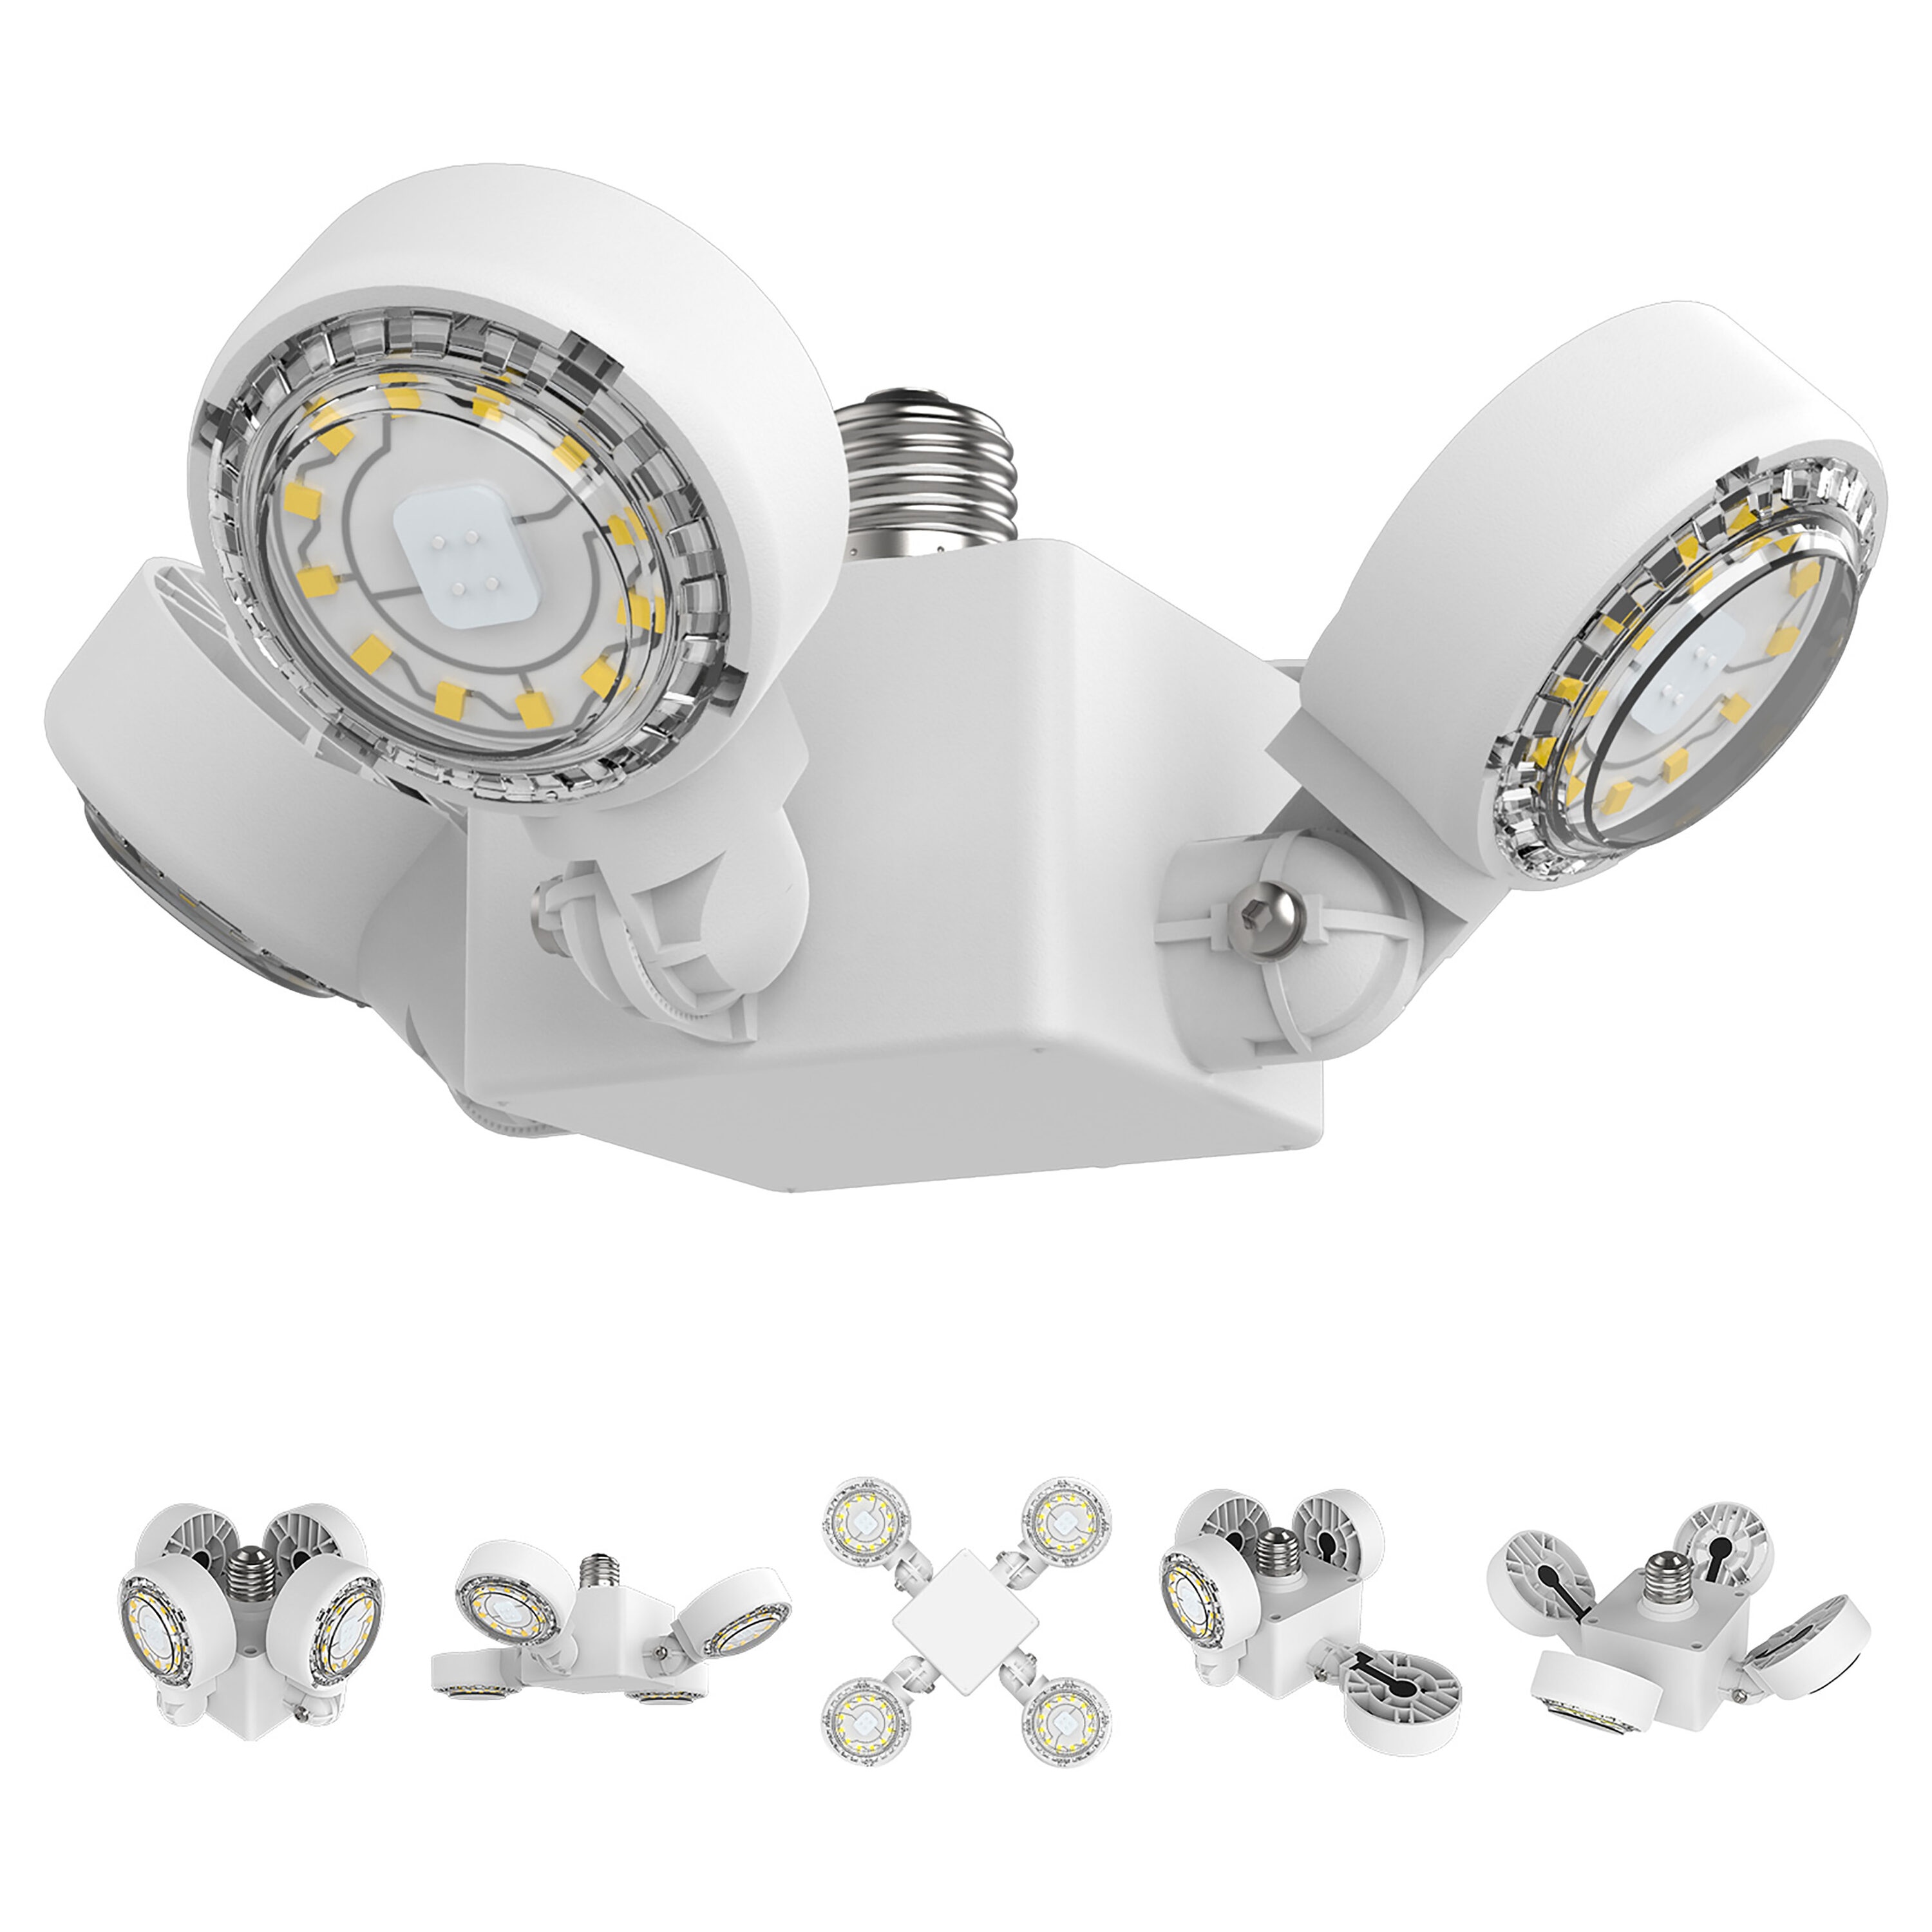 Honeywell 300-Watt EQ Cool Daylight E26 LED Light Bulb in the Spot